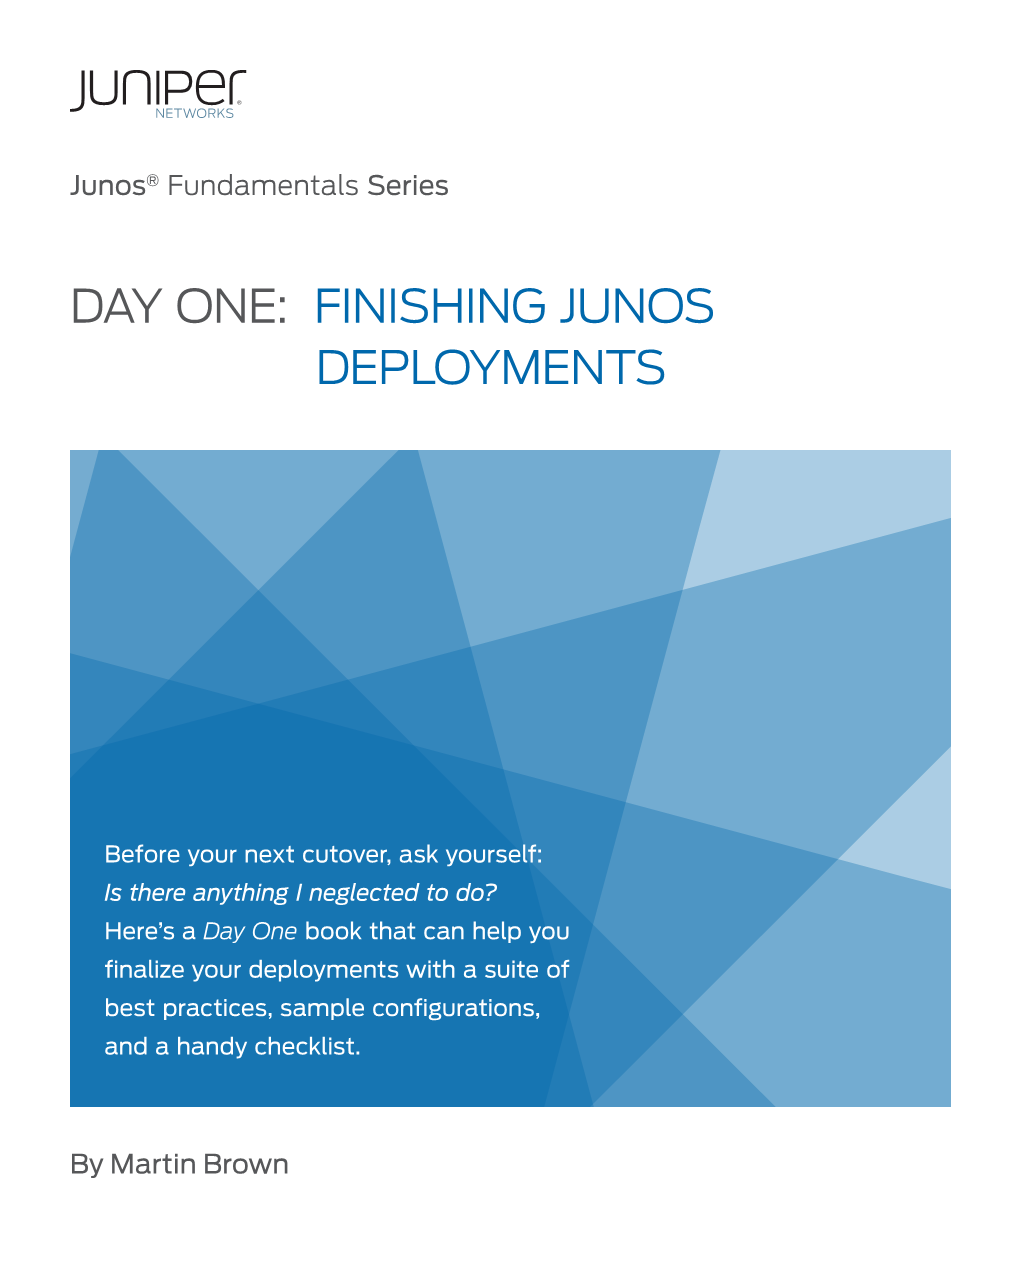 Finishing Junos Deployments